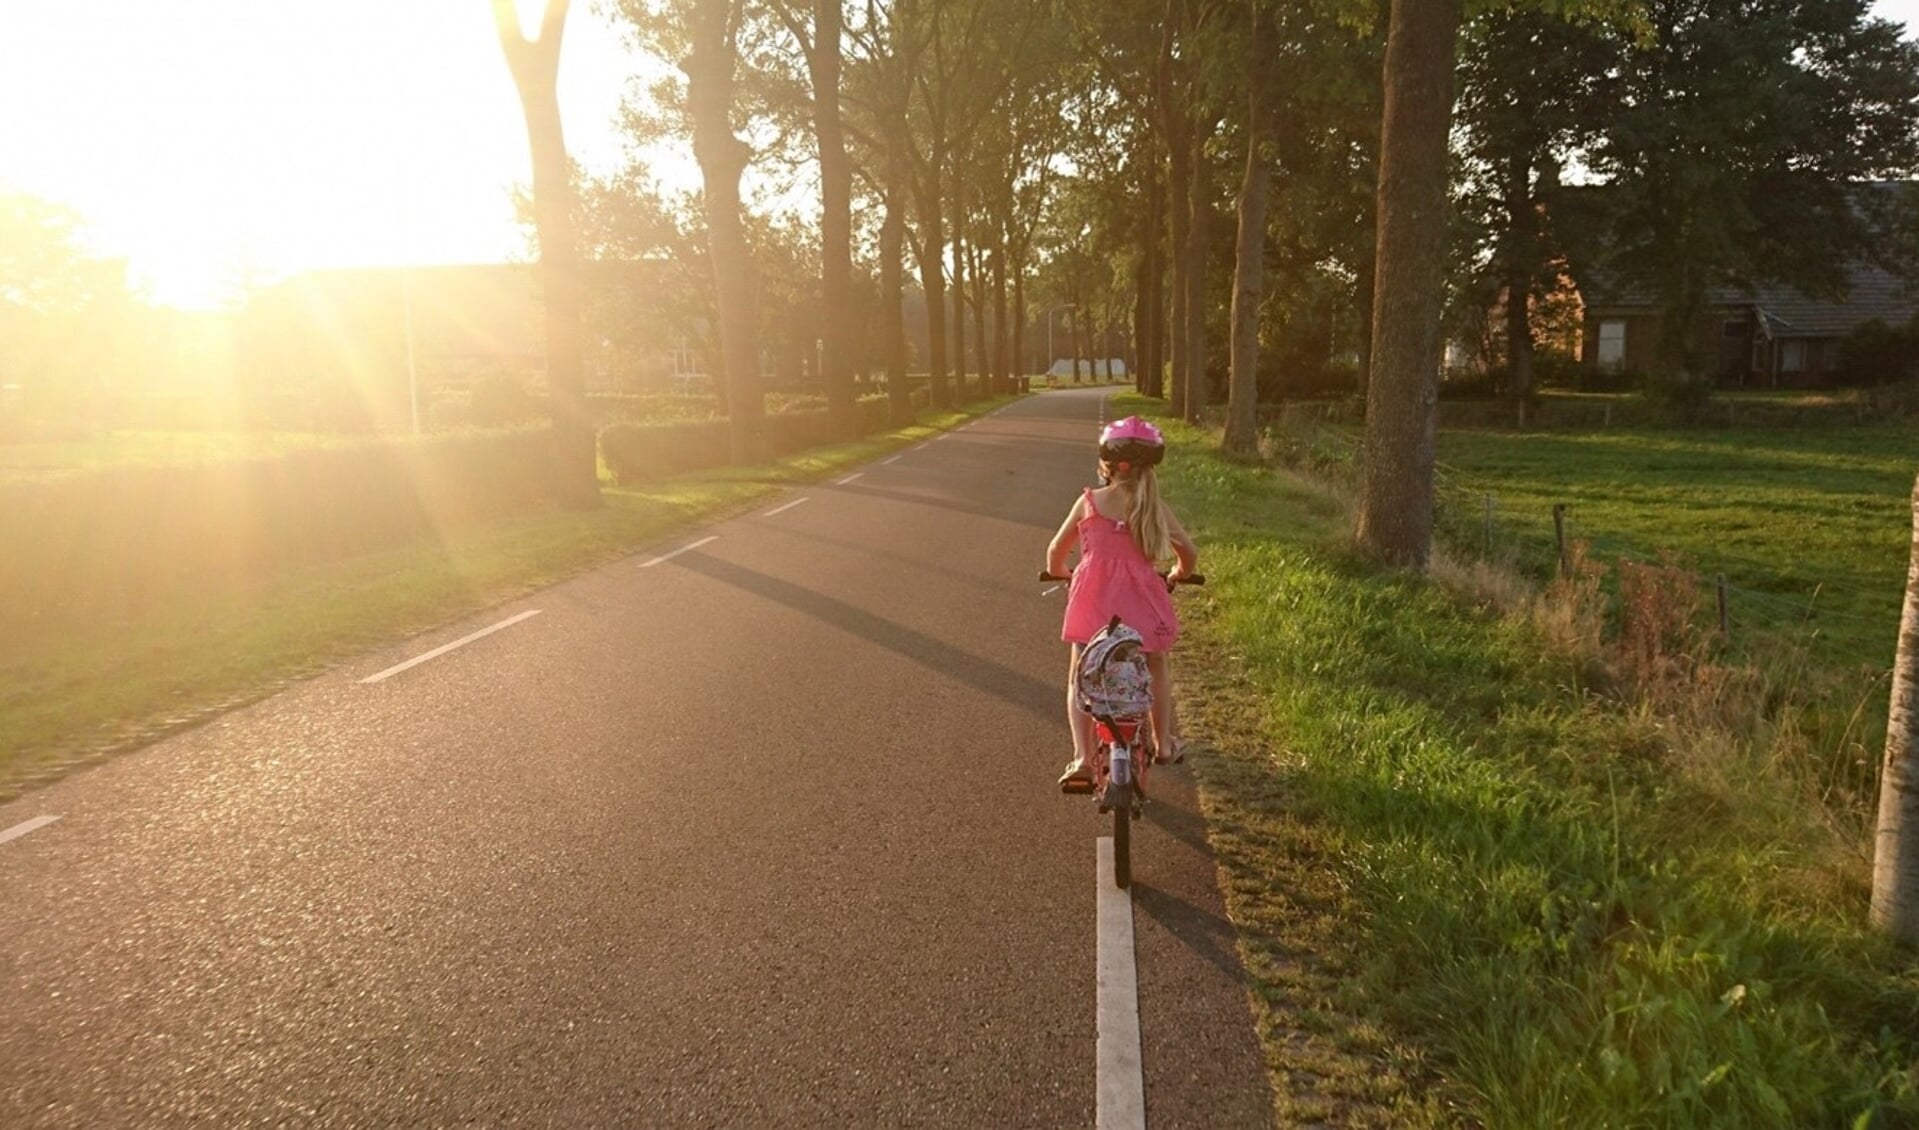 https://pixabay.com/photos/girl-riding-bicycle-school-ride-2209228/ 